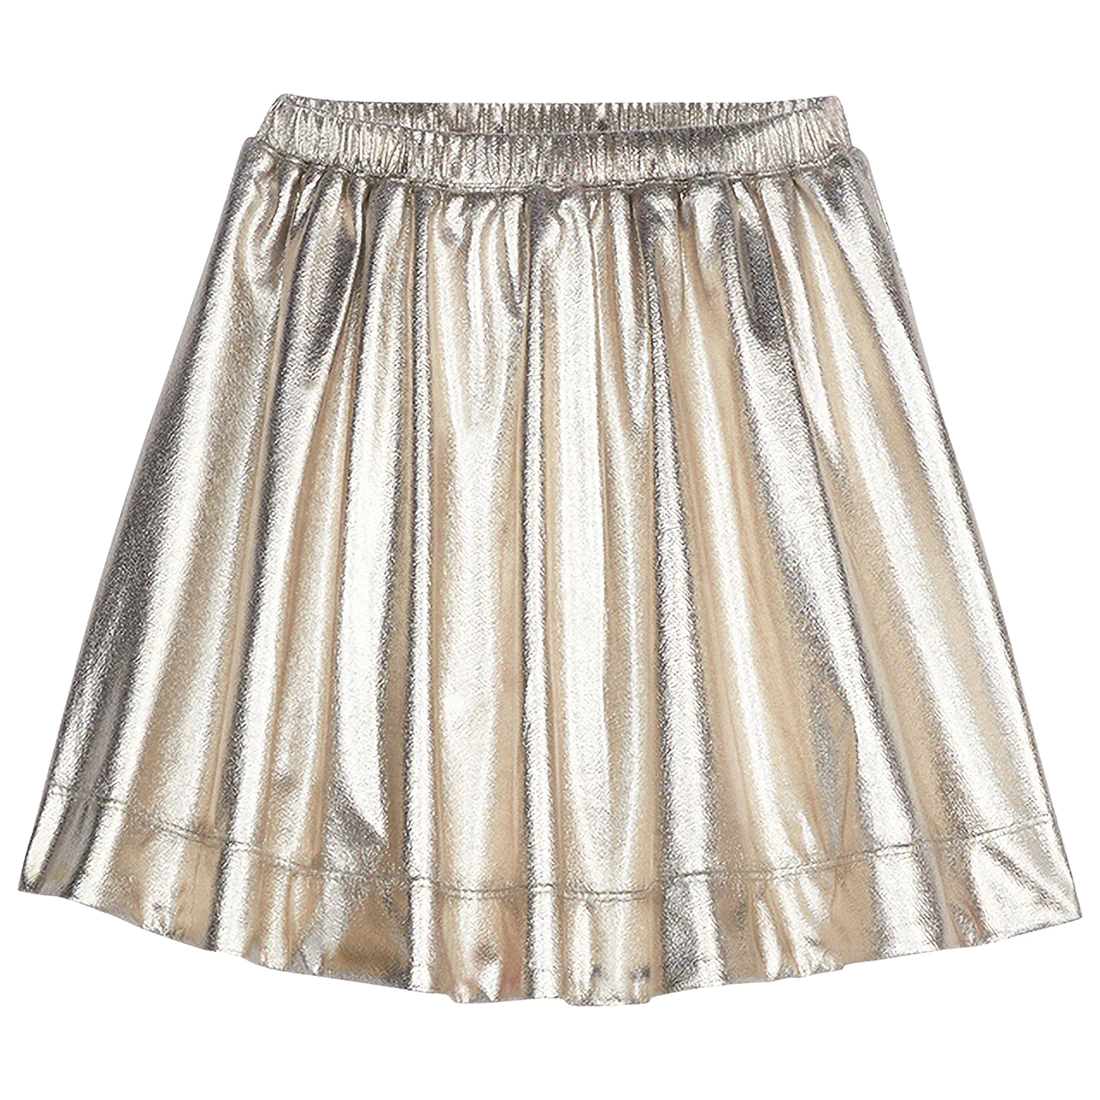 Circle Skirt - Gold Lame